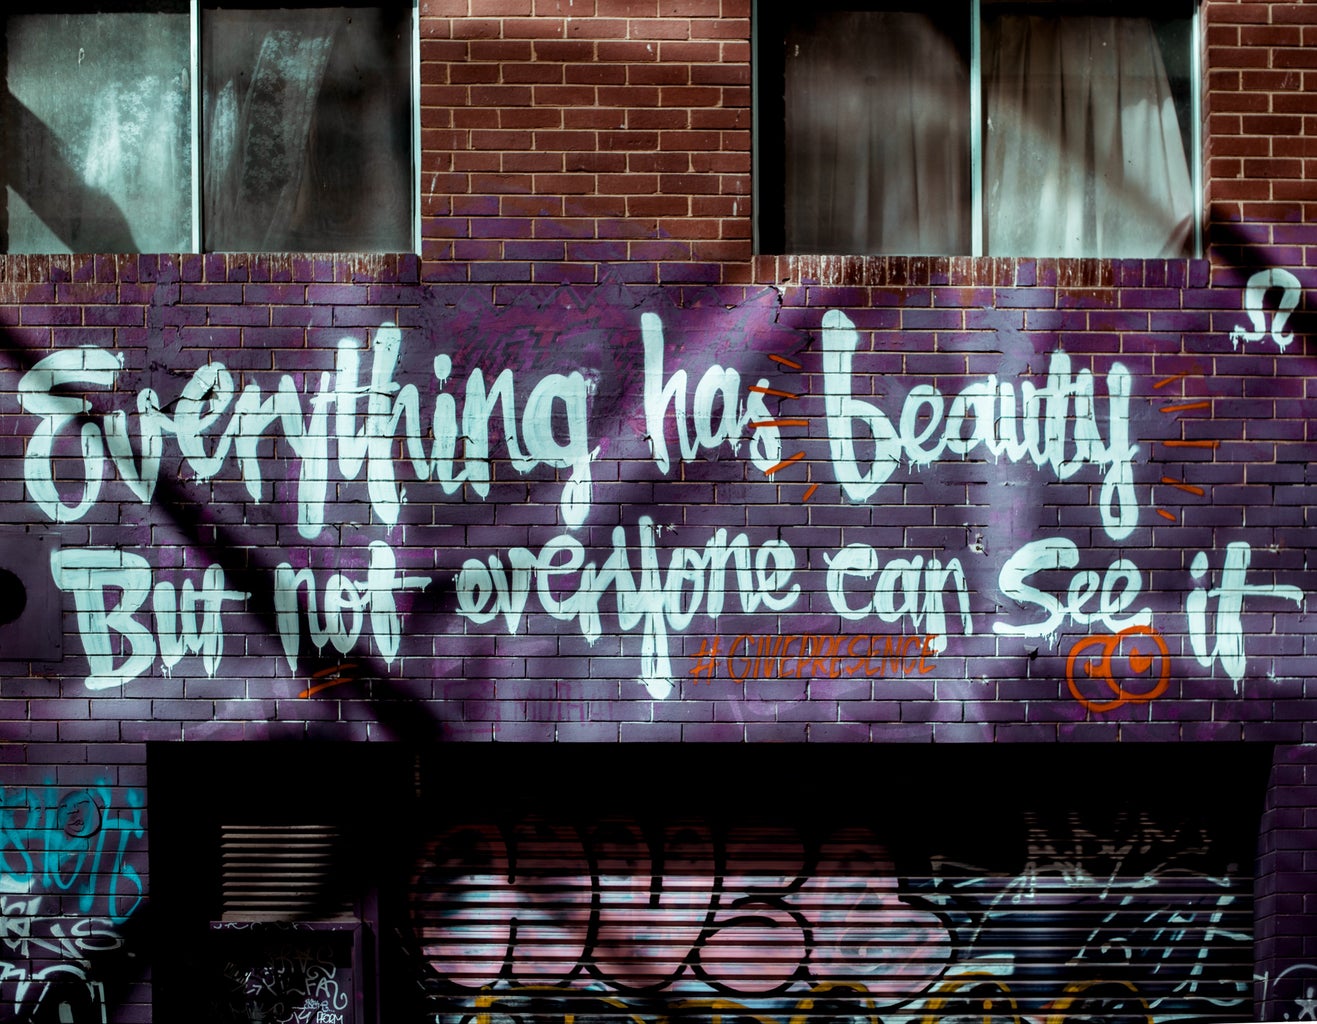 Everything has beauty street art